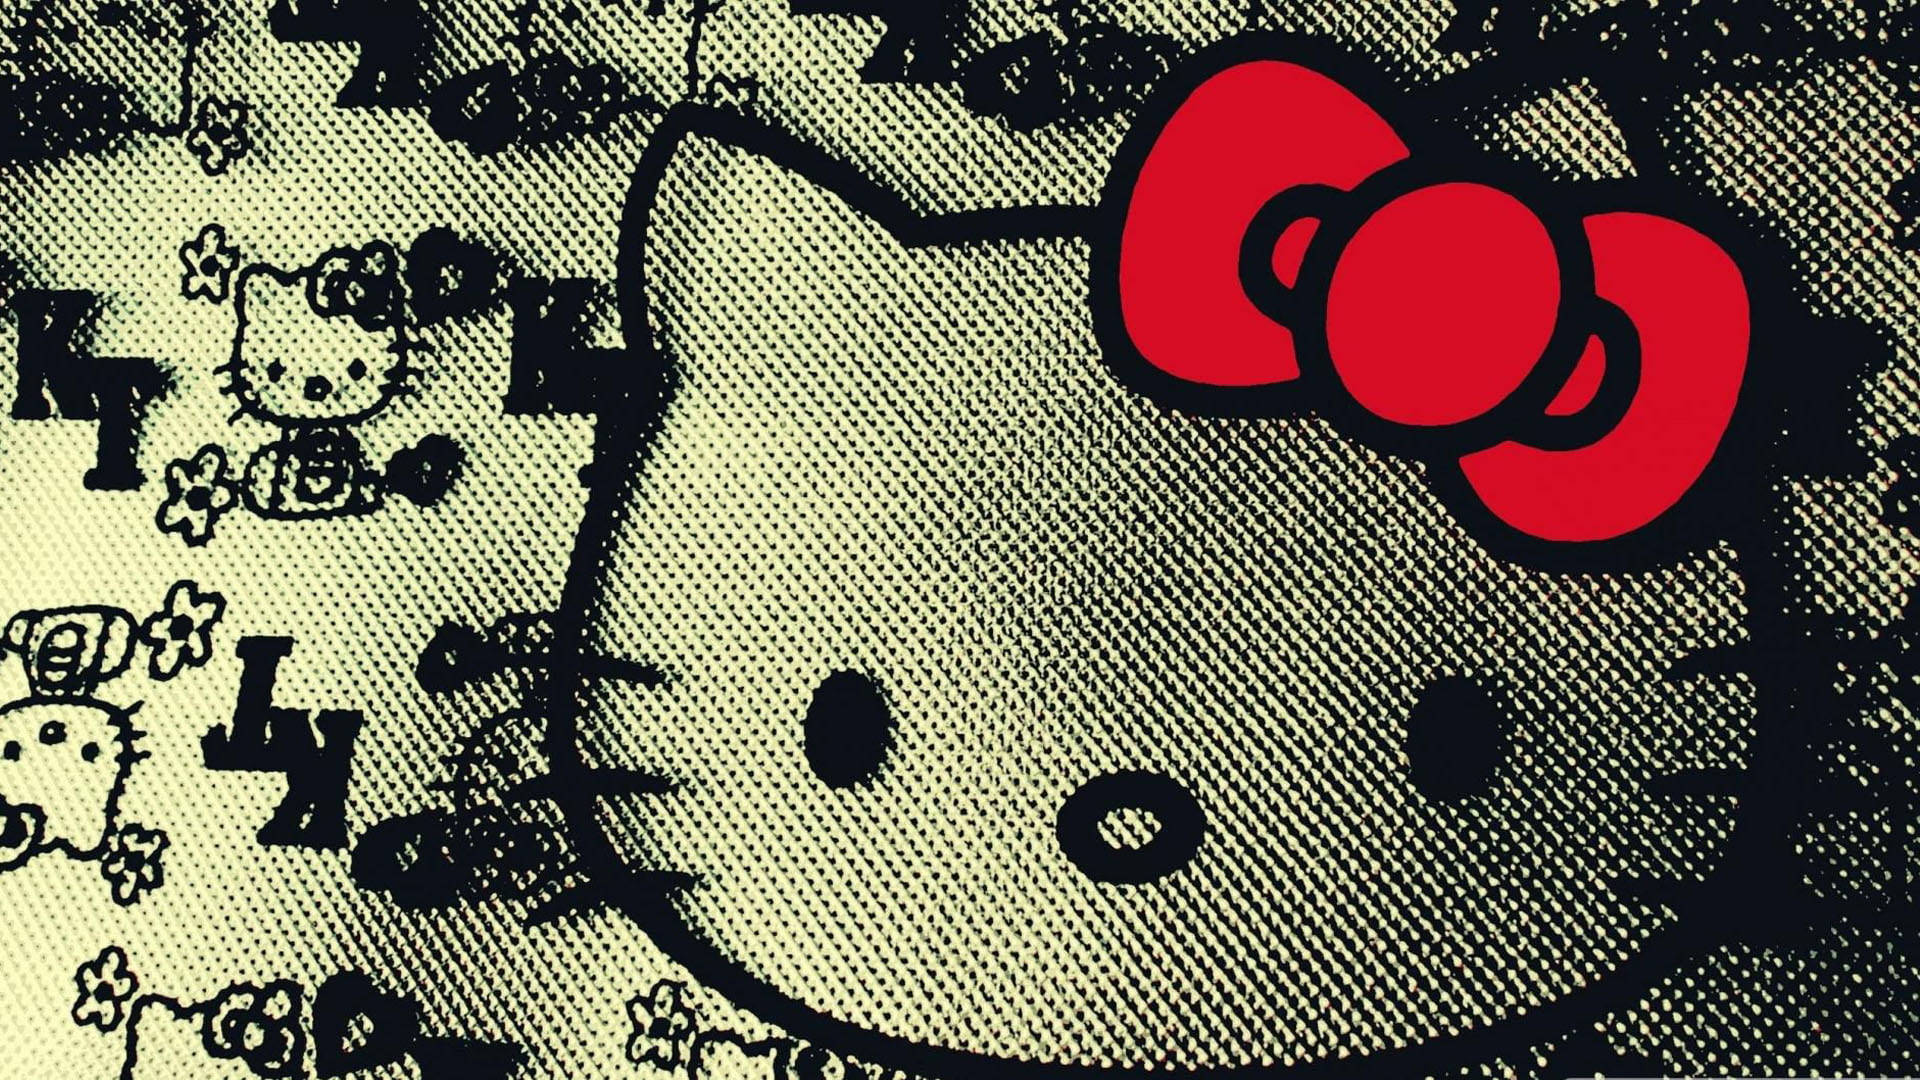 100+] Black Hello Kitty Wallpapers